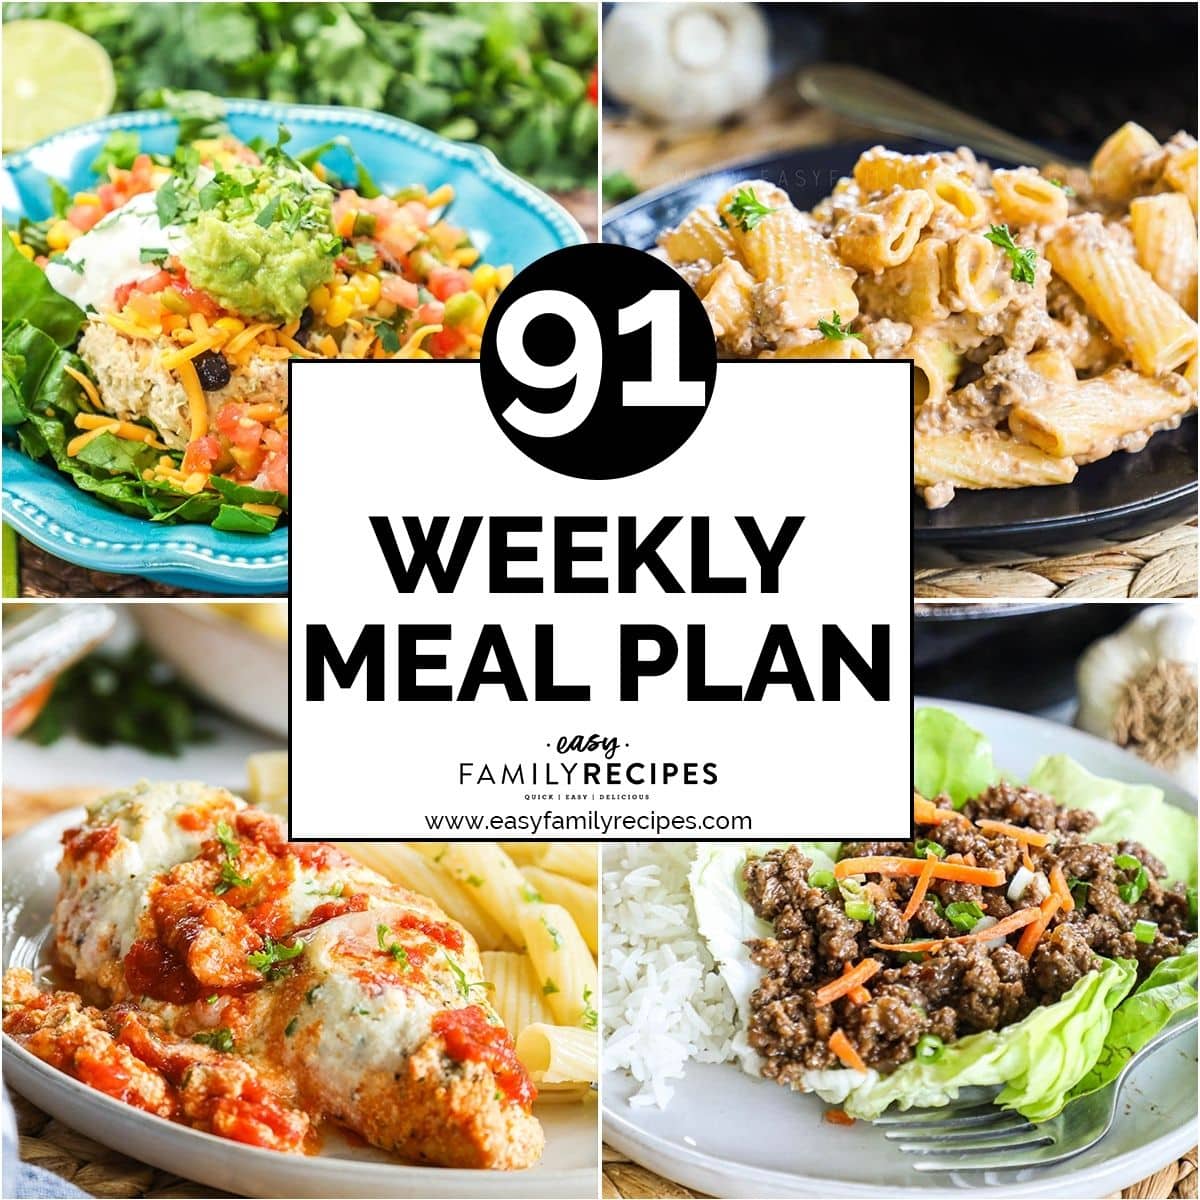 Weekly Meal Plan 91